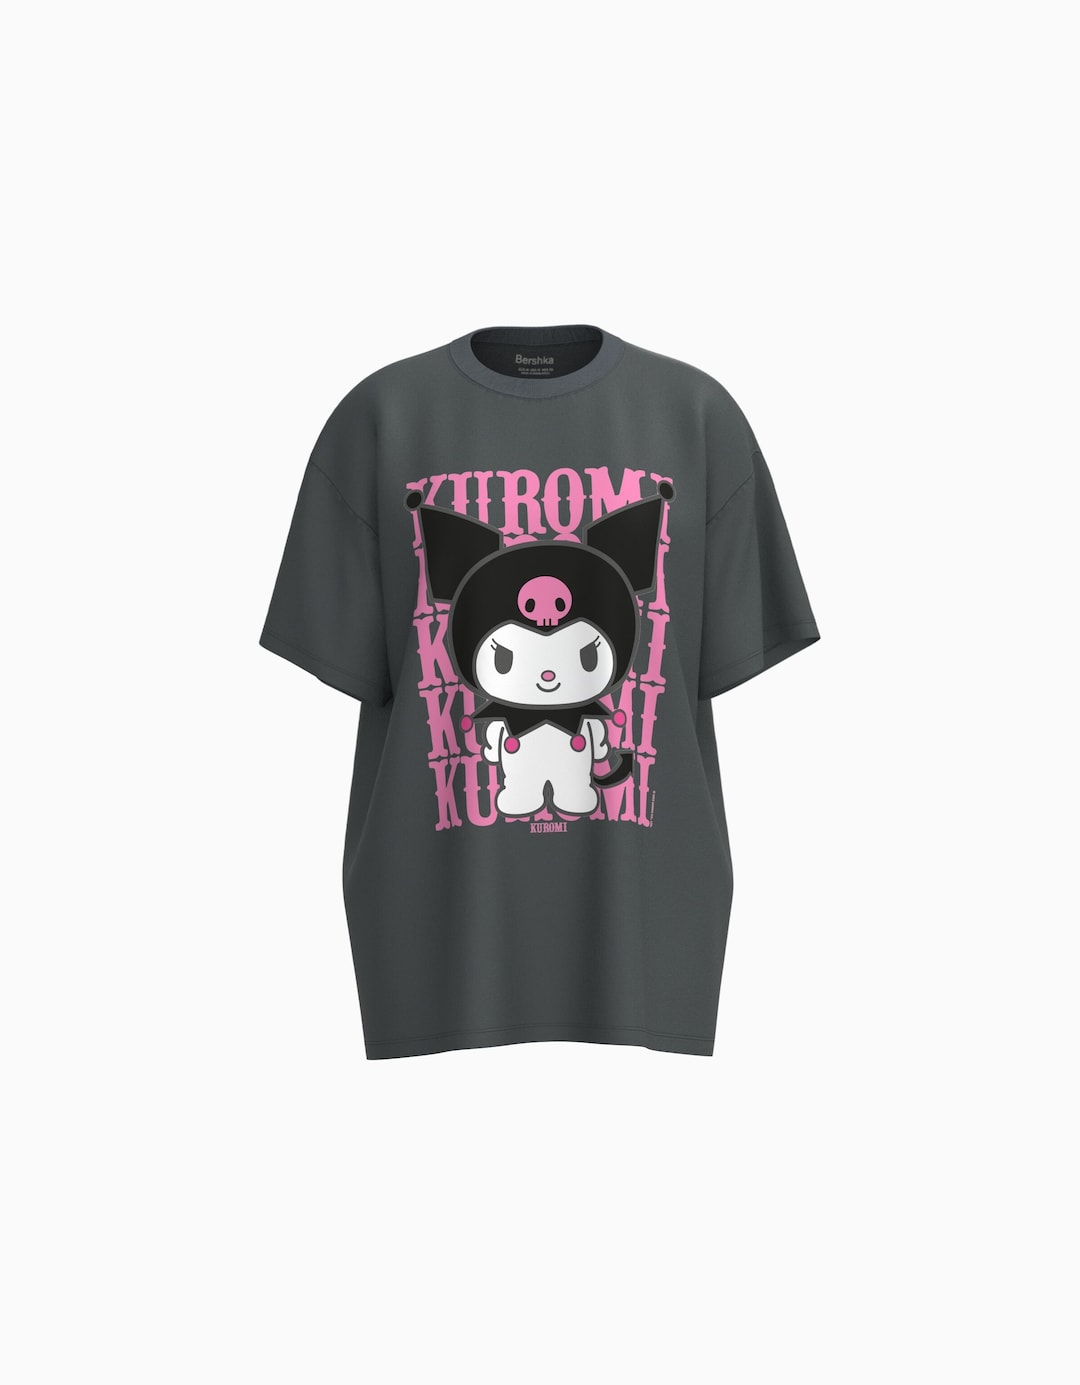 Kortärmad oversize t-shirt med Kuromi-tryck